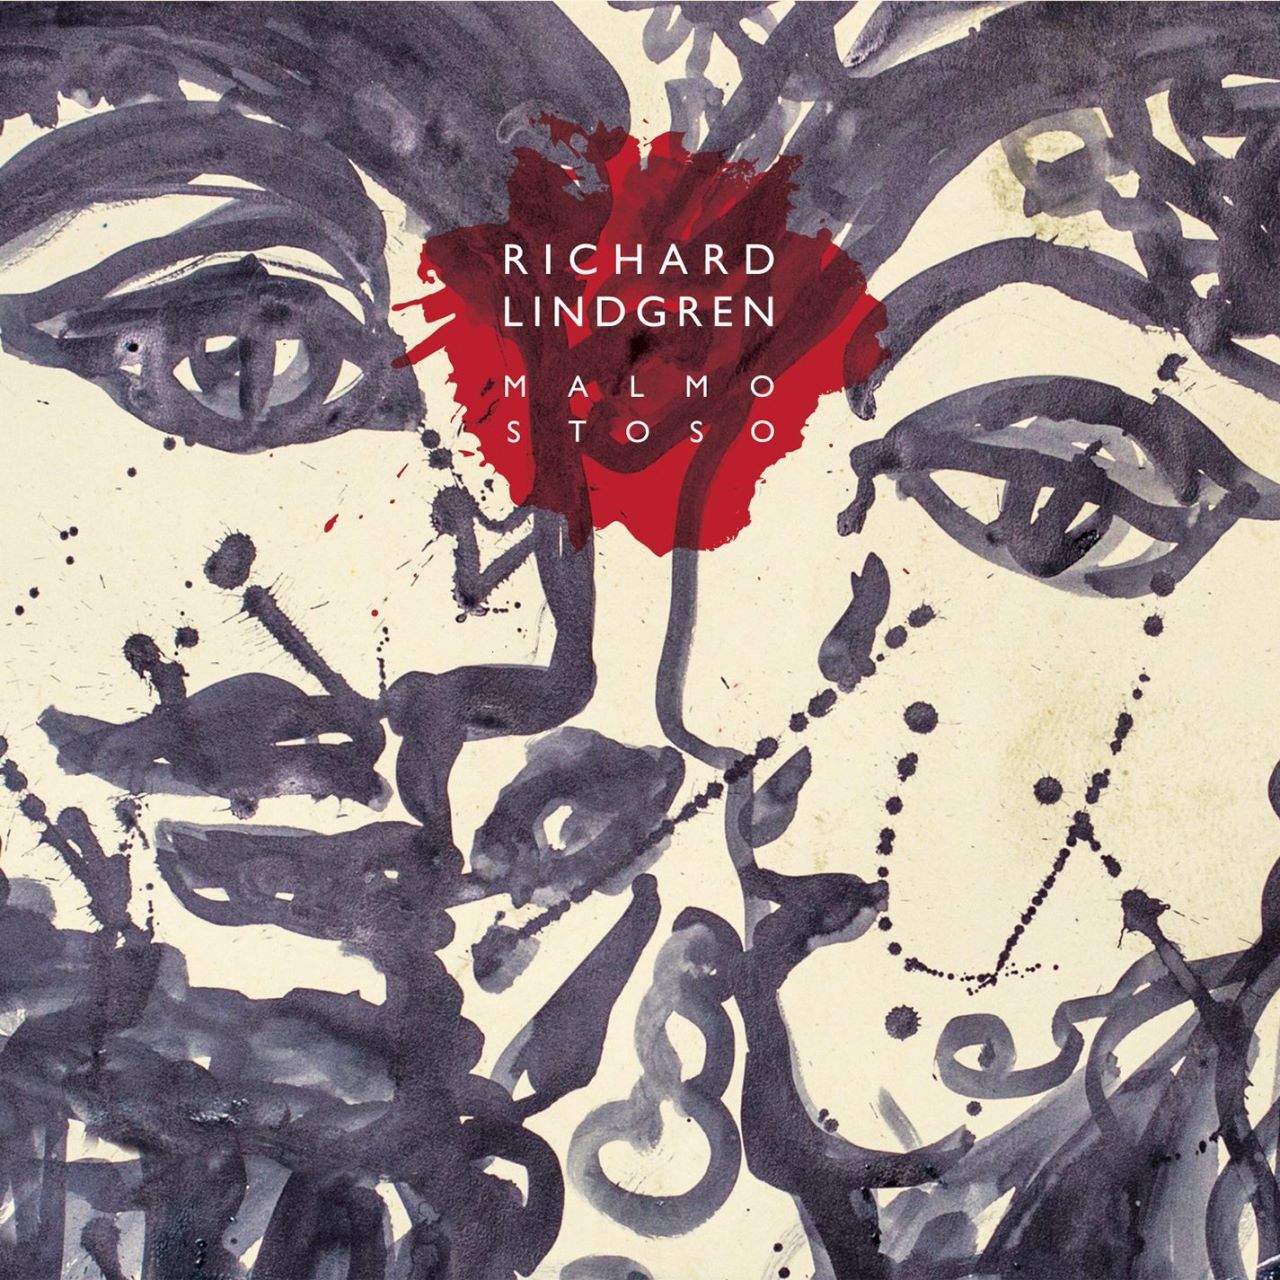 Richard Lindgren - Malmostoso cover album